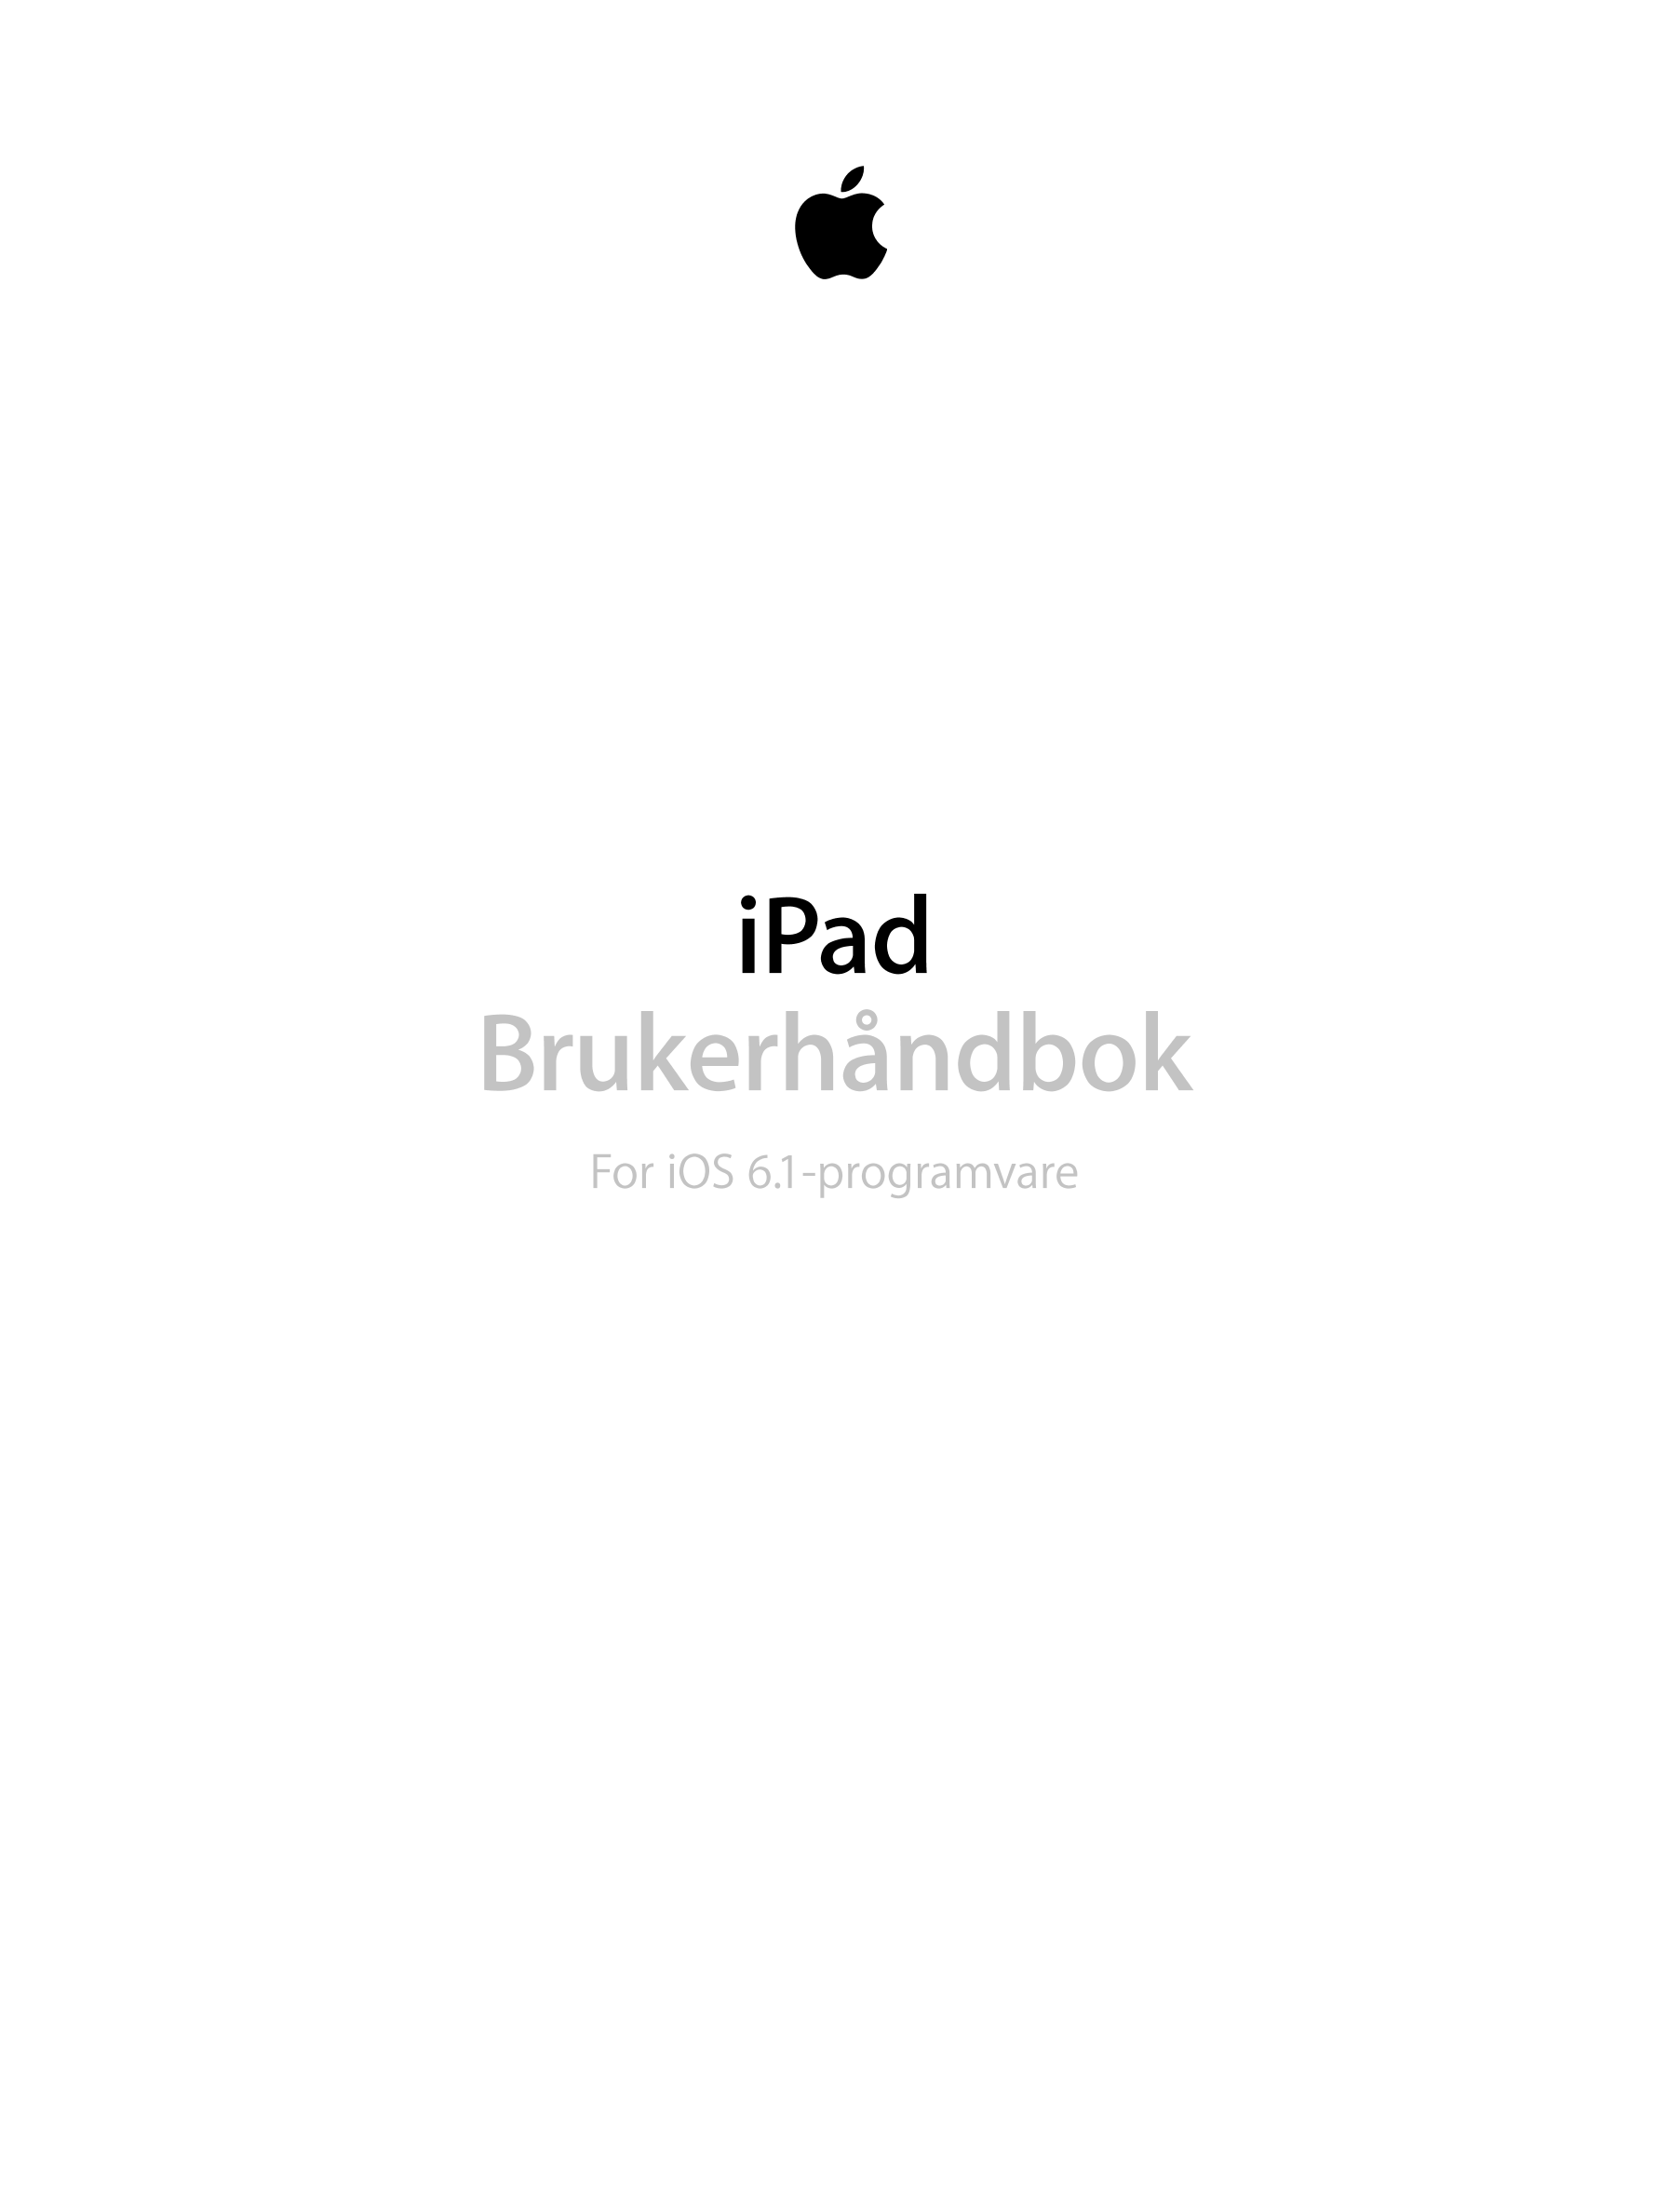 iPad
Brukerhåndbok
For iOS 6.1-programvare